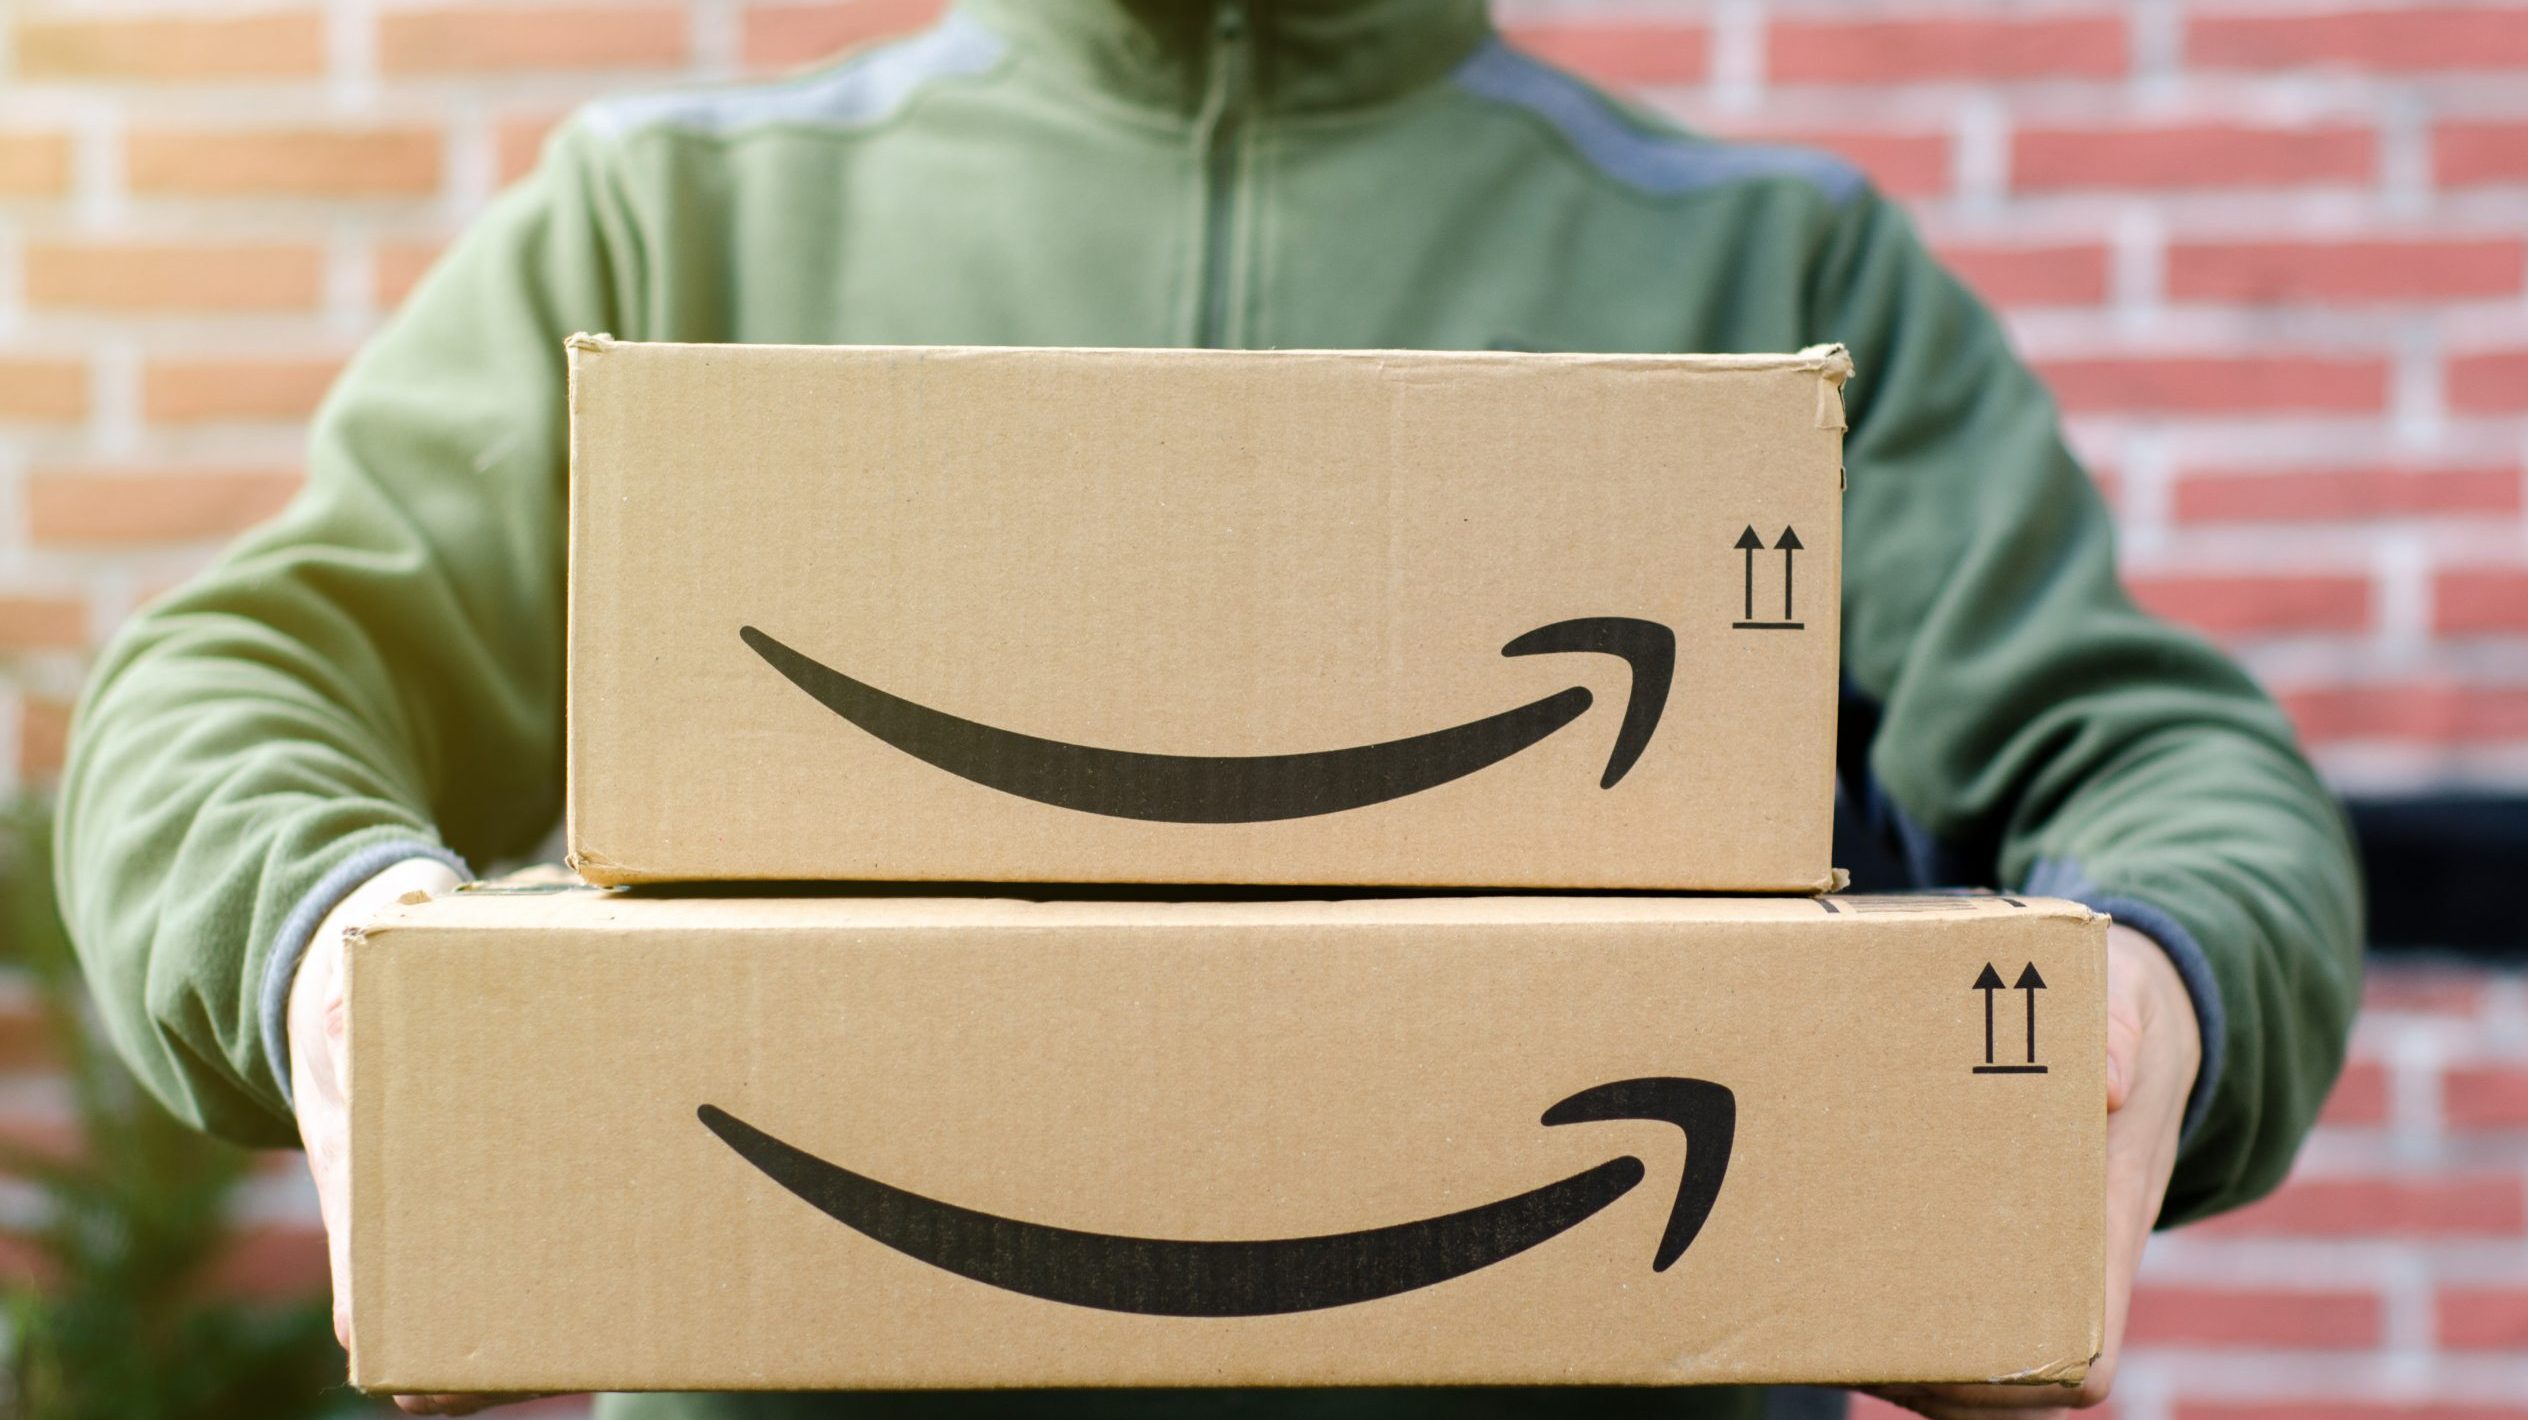 Man holds Amazon boxes